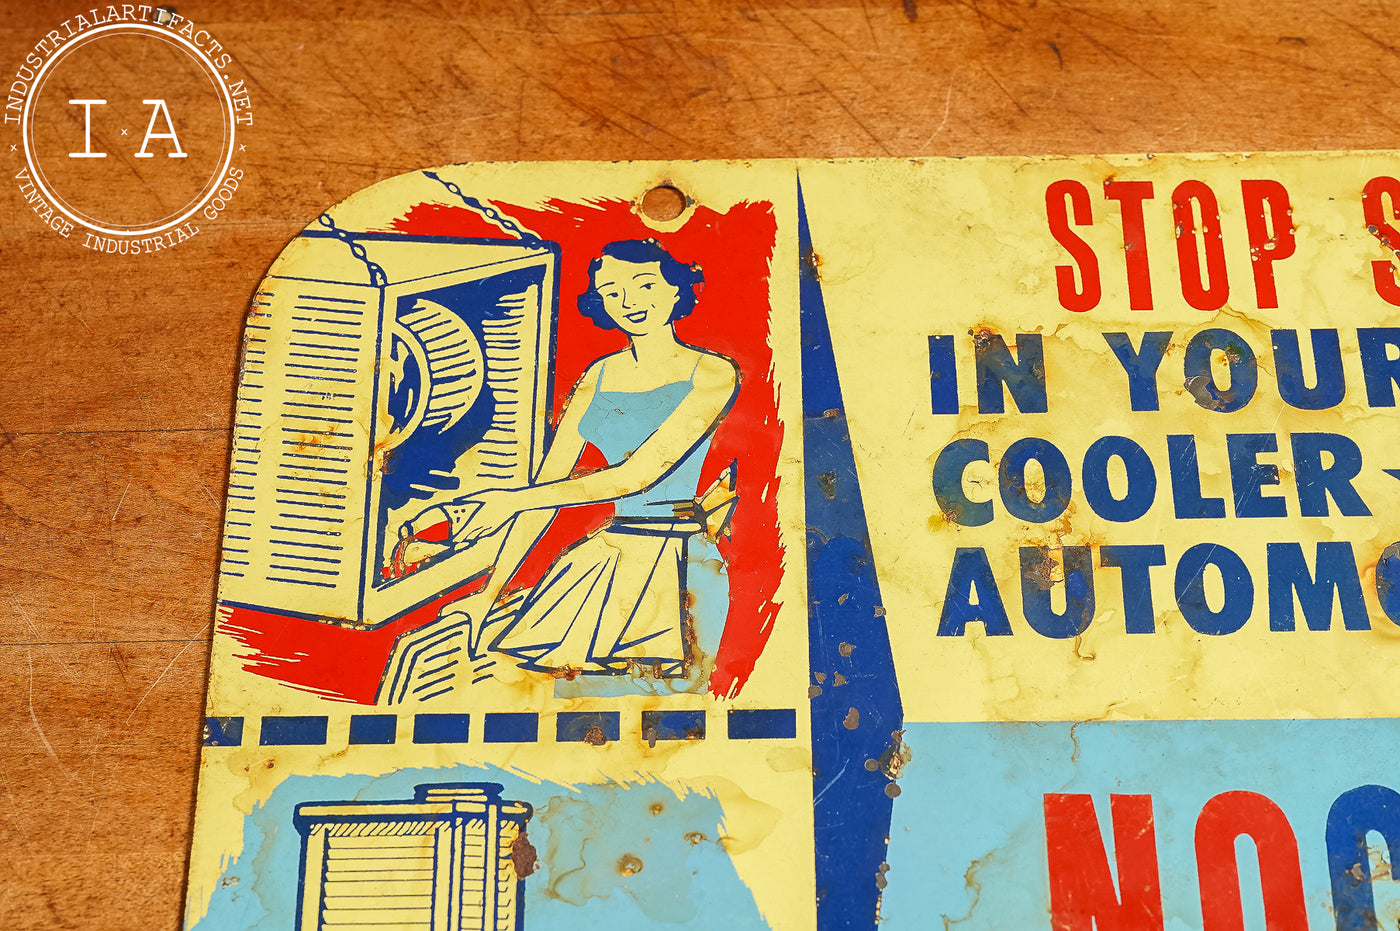 Vintage NoCor Tin Advertising Sign